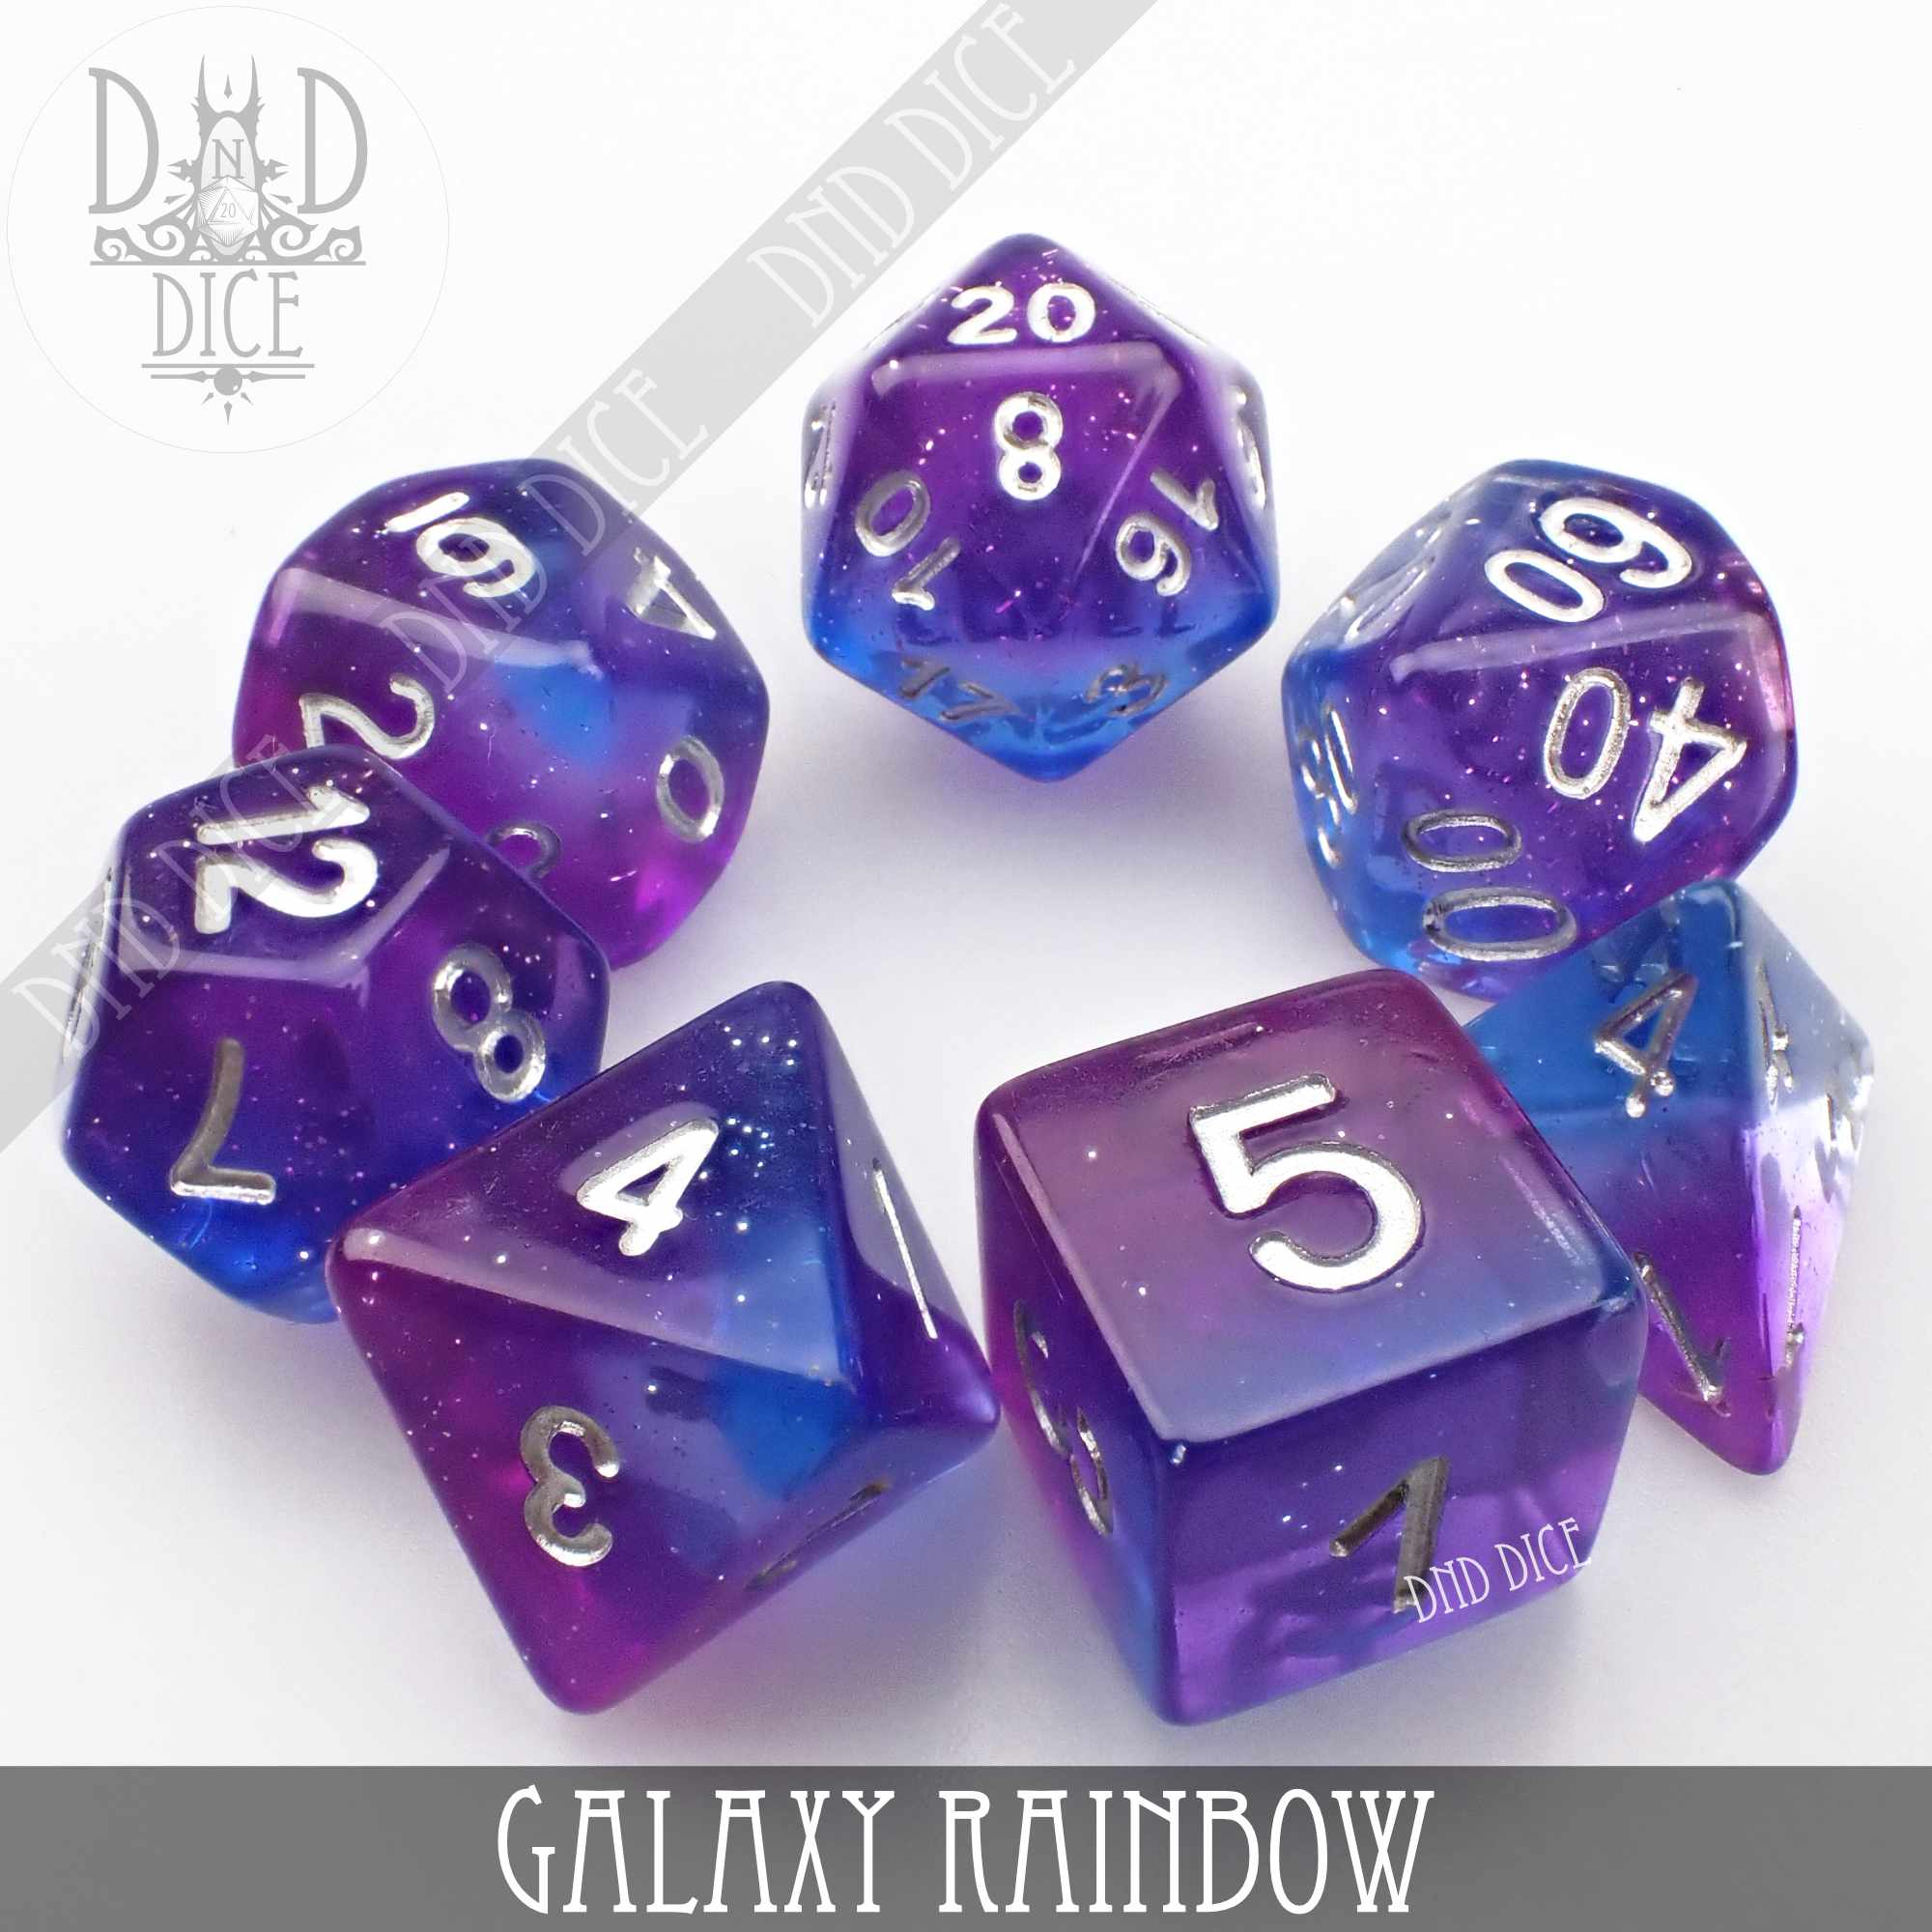 Galaxy Rainbow Dice Set